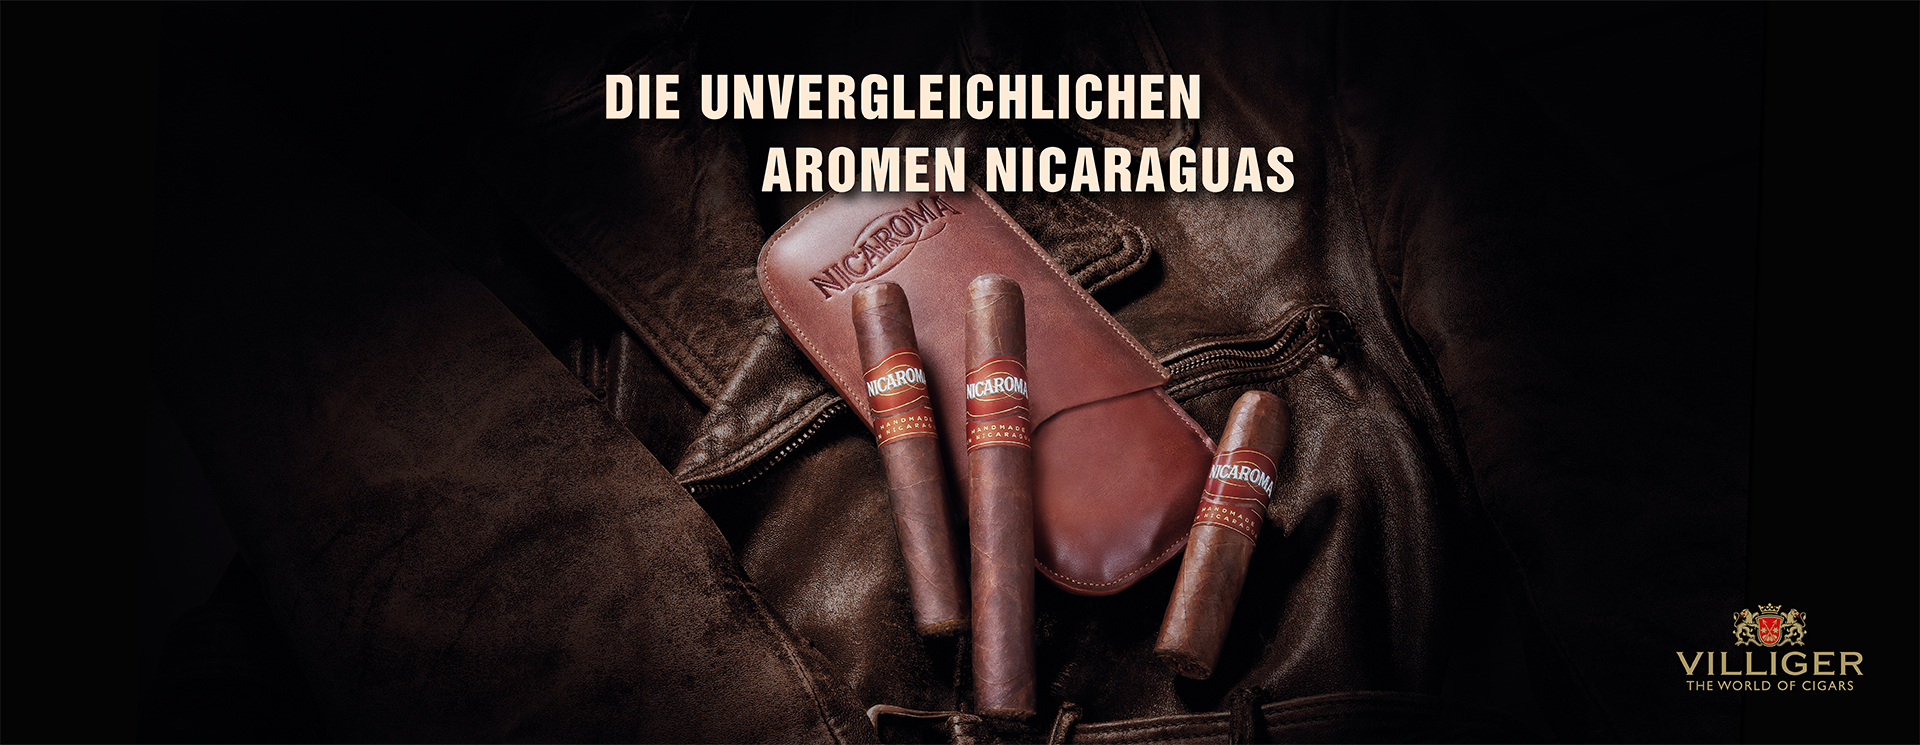 Nicaroma Zigarren